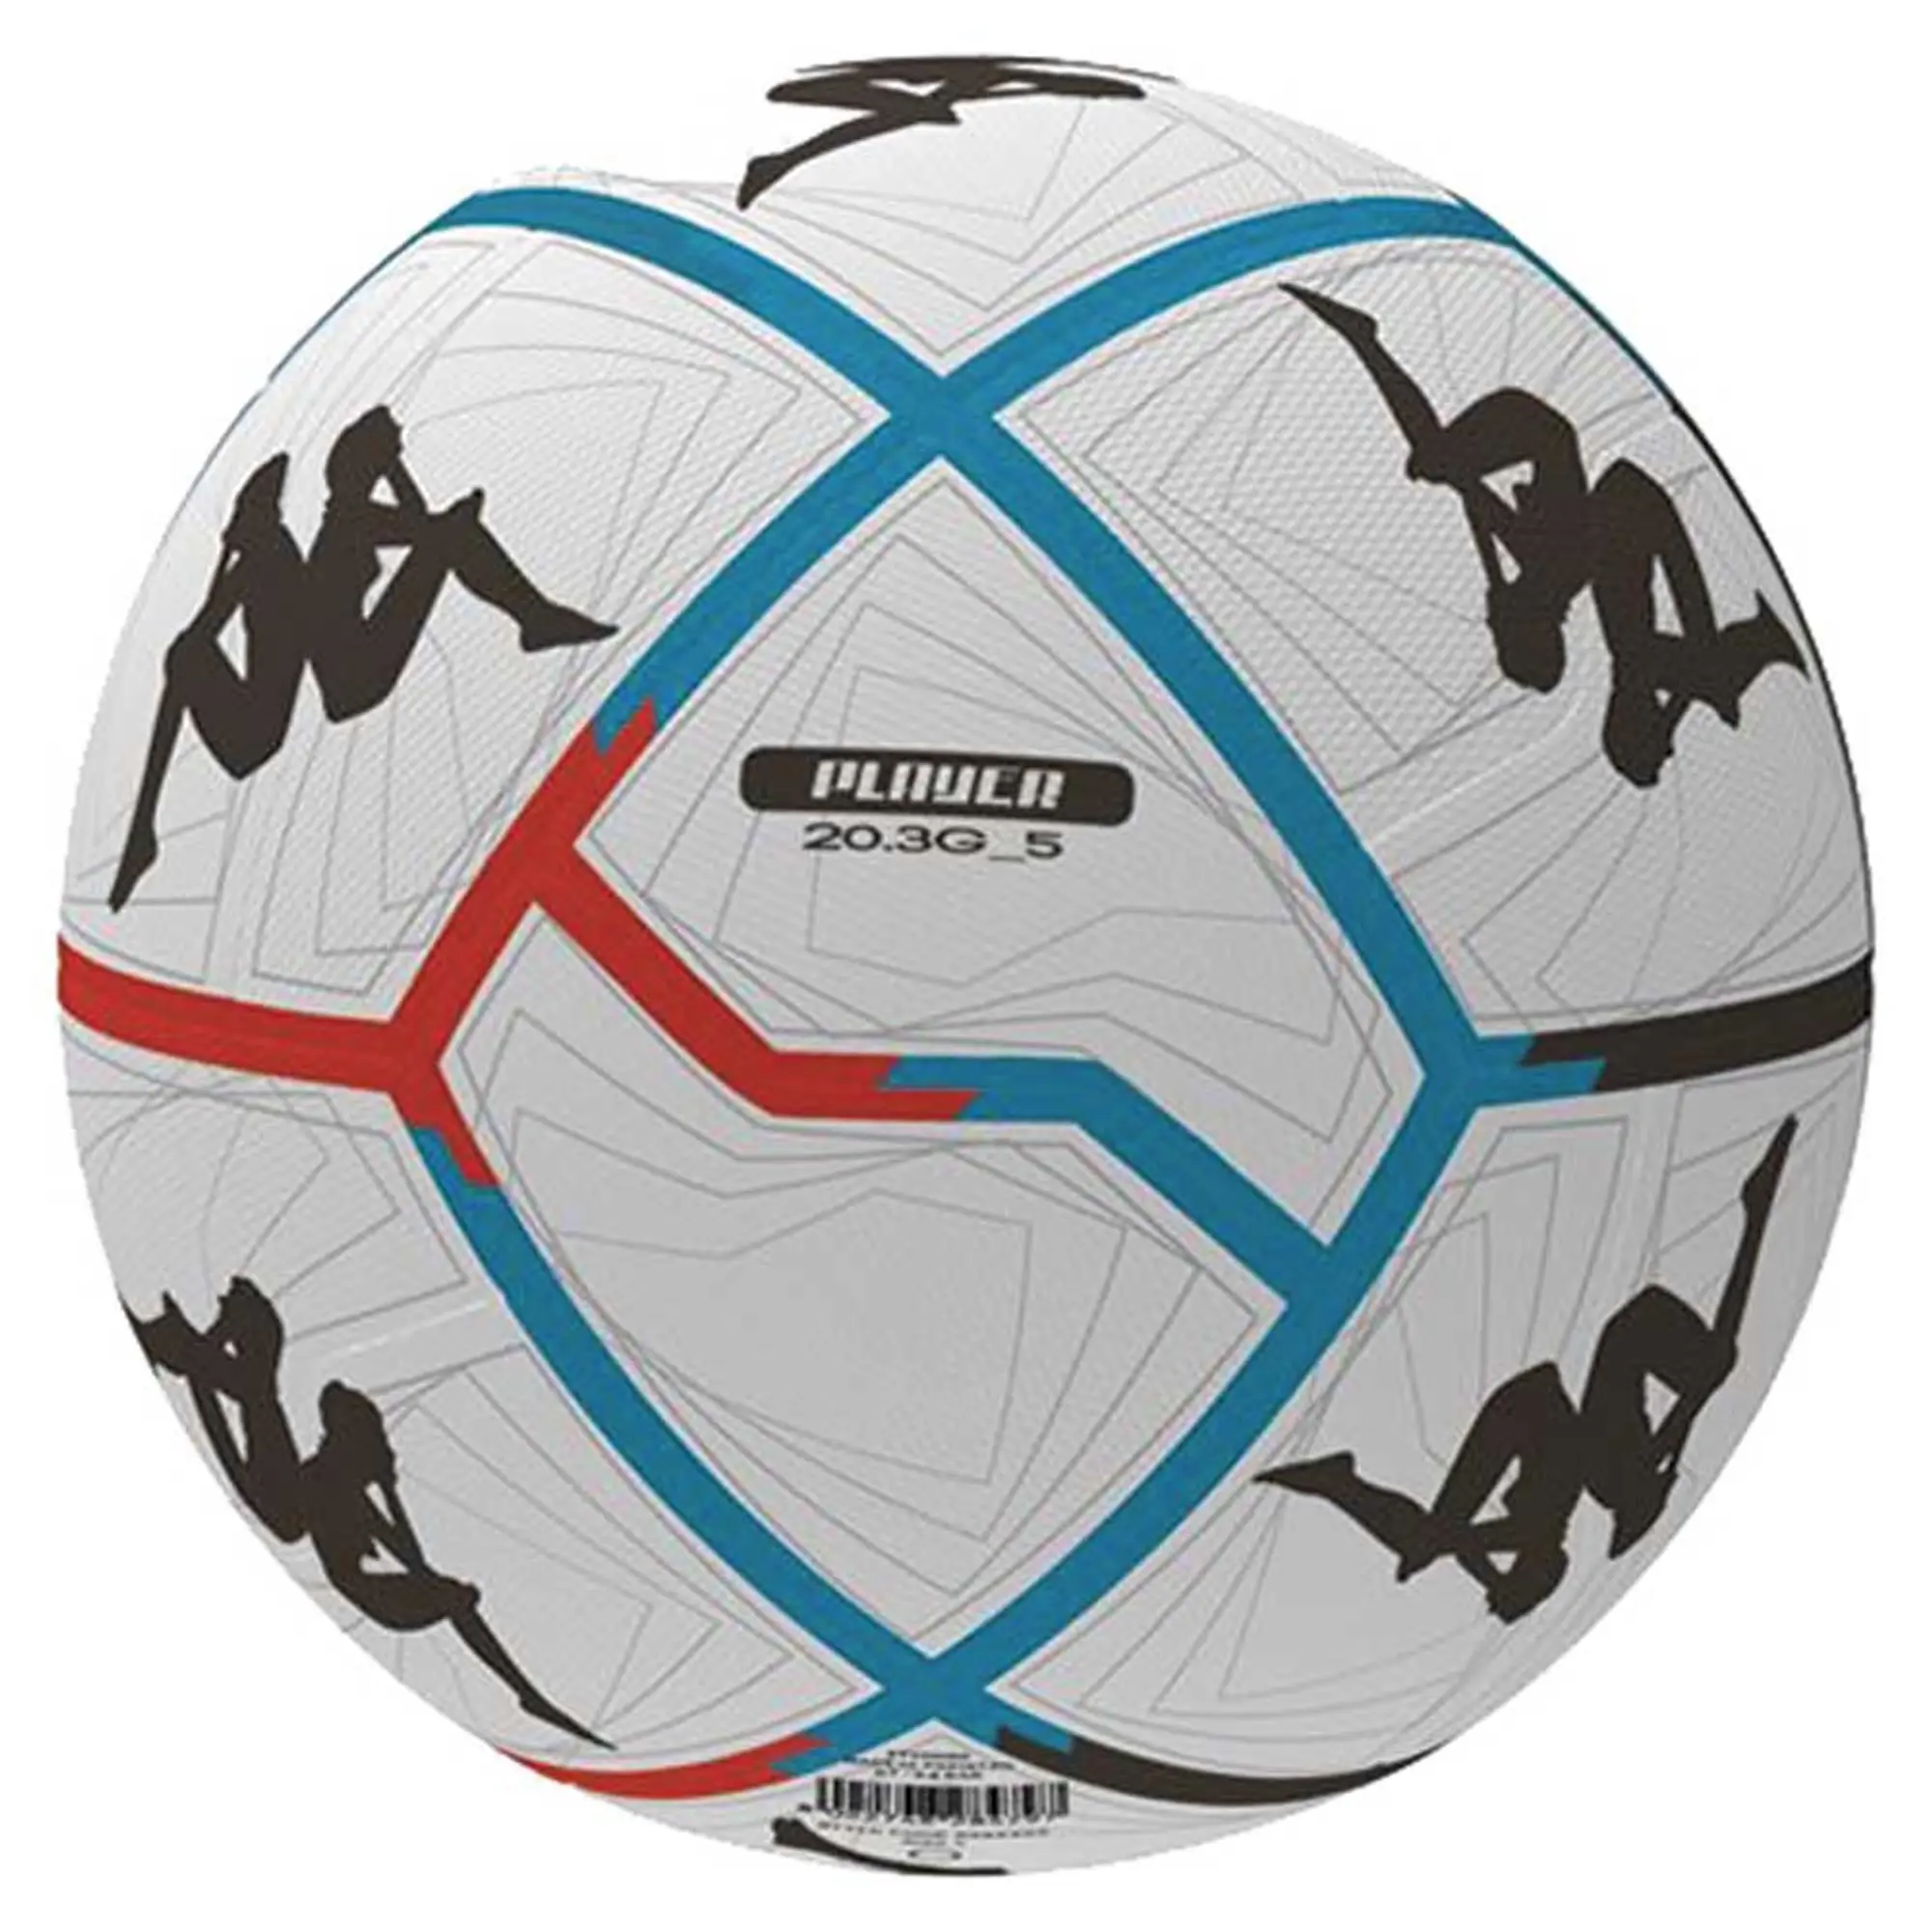 Kappa Player 20.3g Football Ball  - White